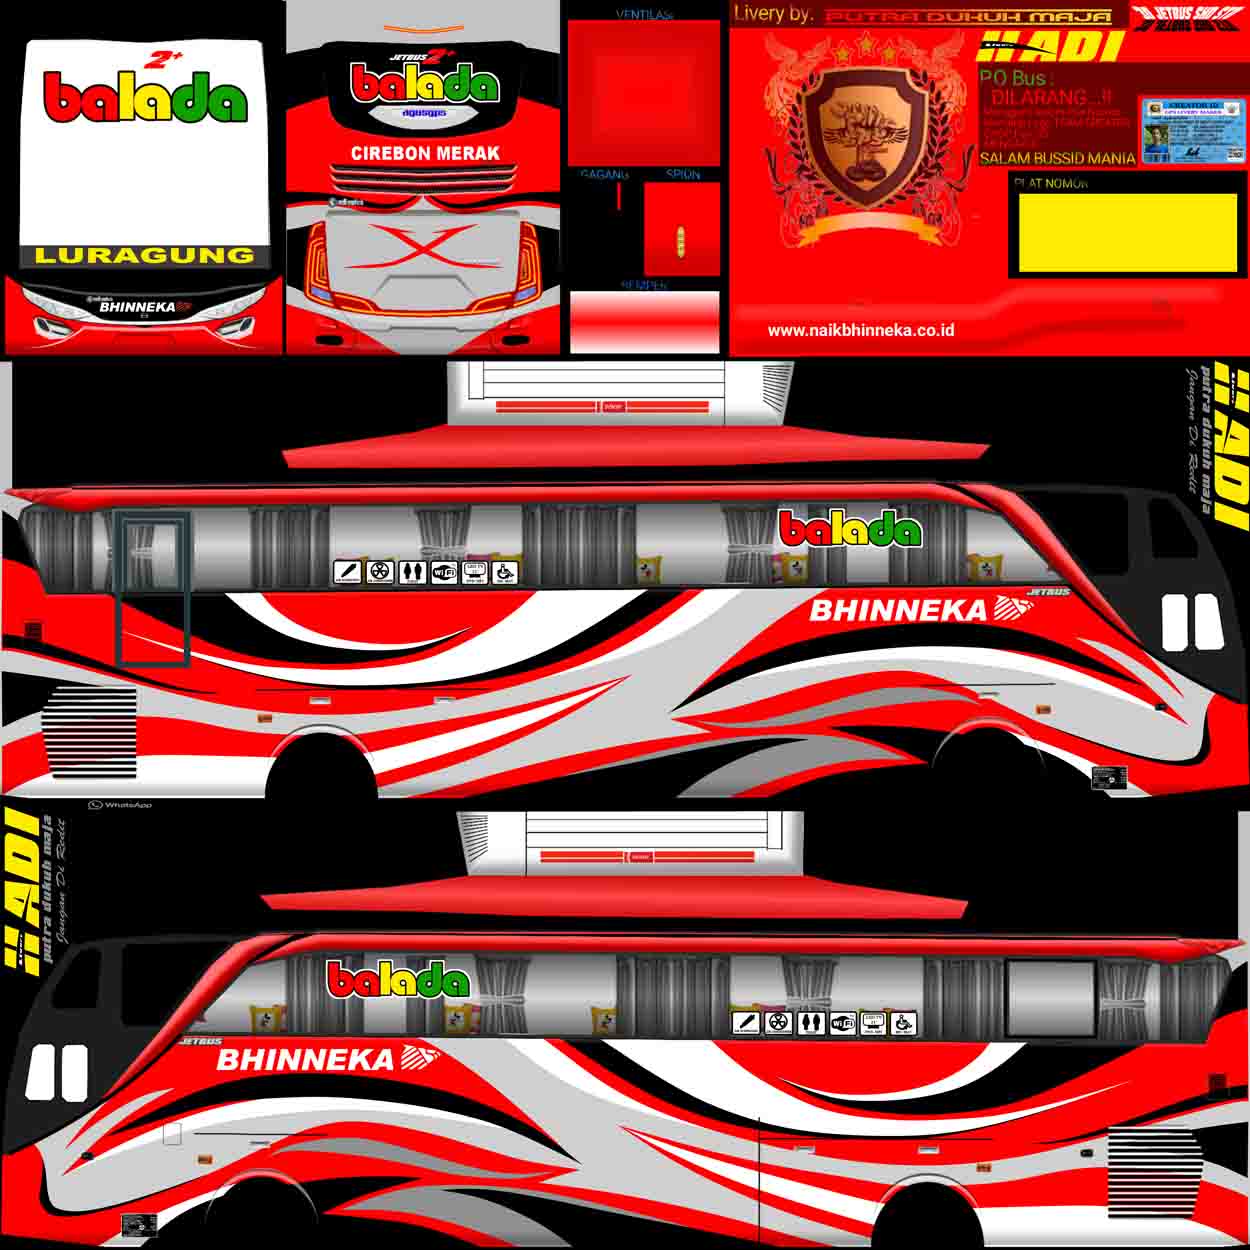 download livery bus bhinneka